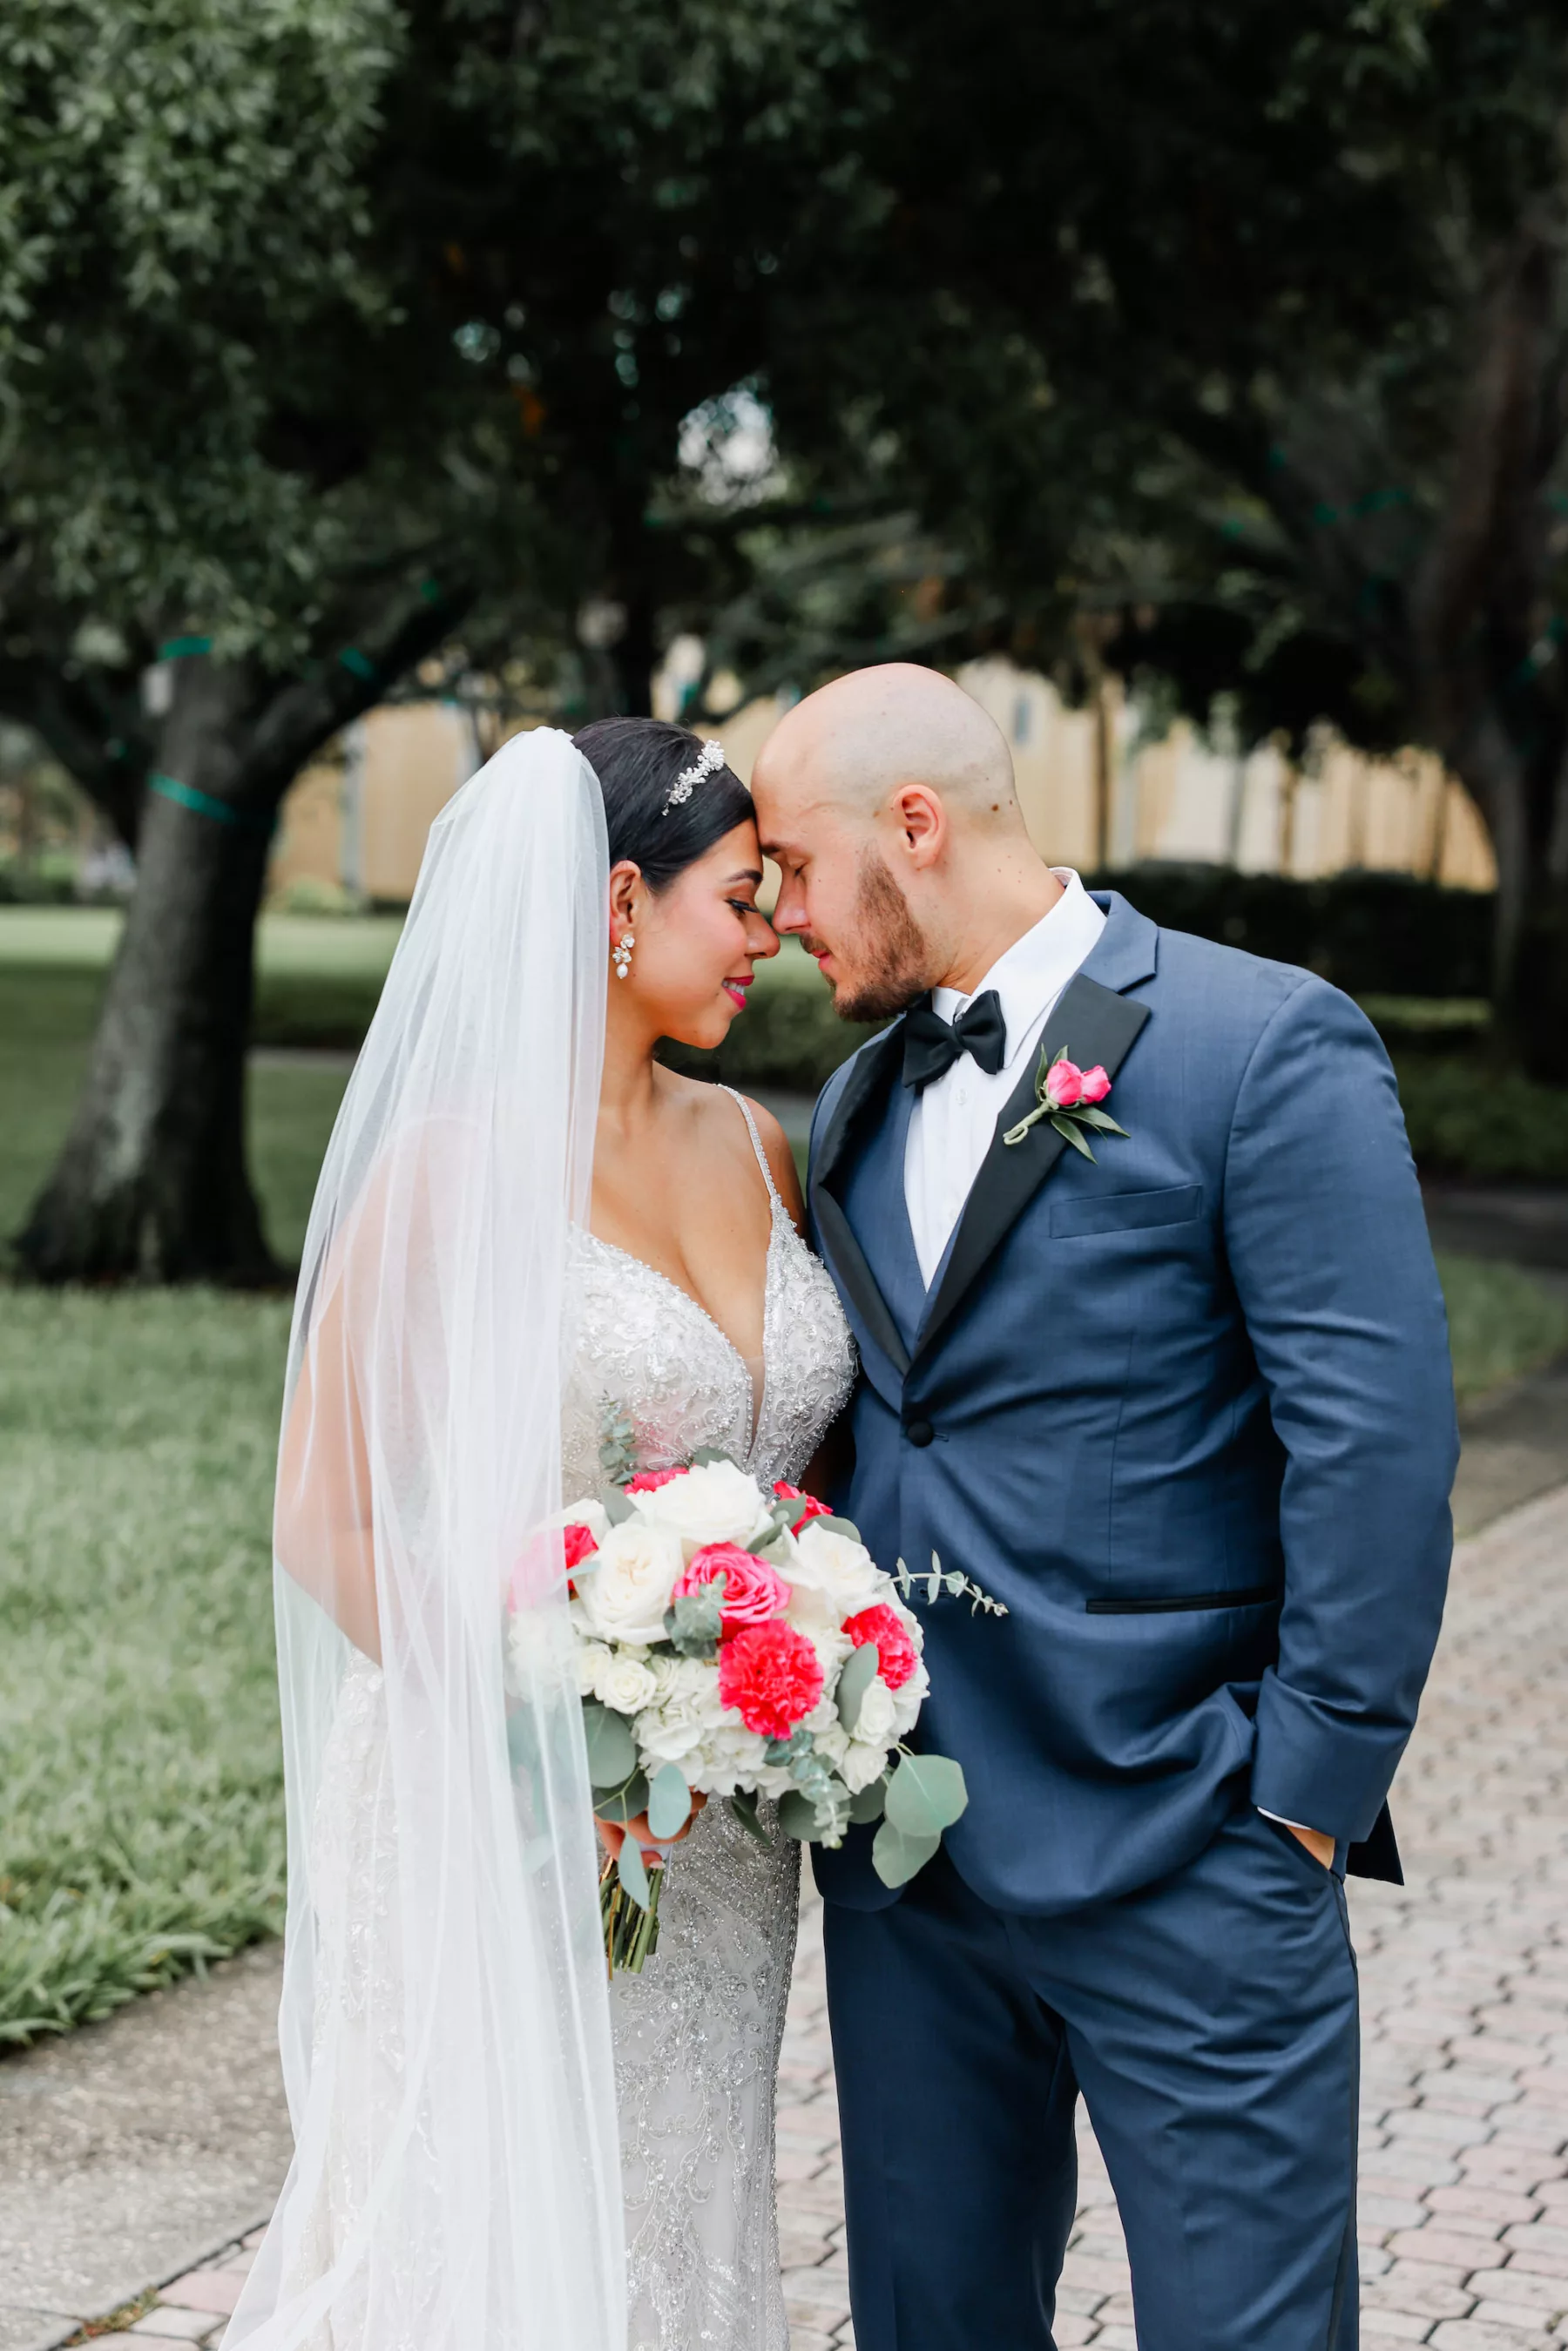 Intimate Bride and Groom Wedding Portrait | Navy and Black Groom;s Tuxedo Attire Inspiration | Tampa Bay Photographer Lifelong Photography Studio